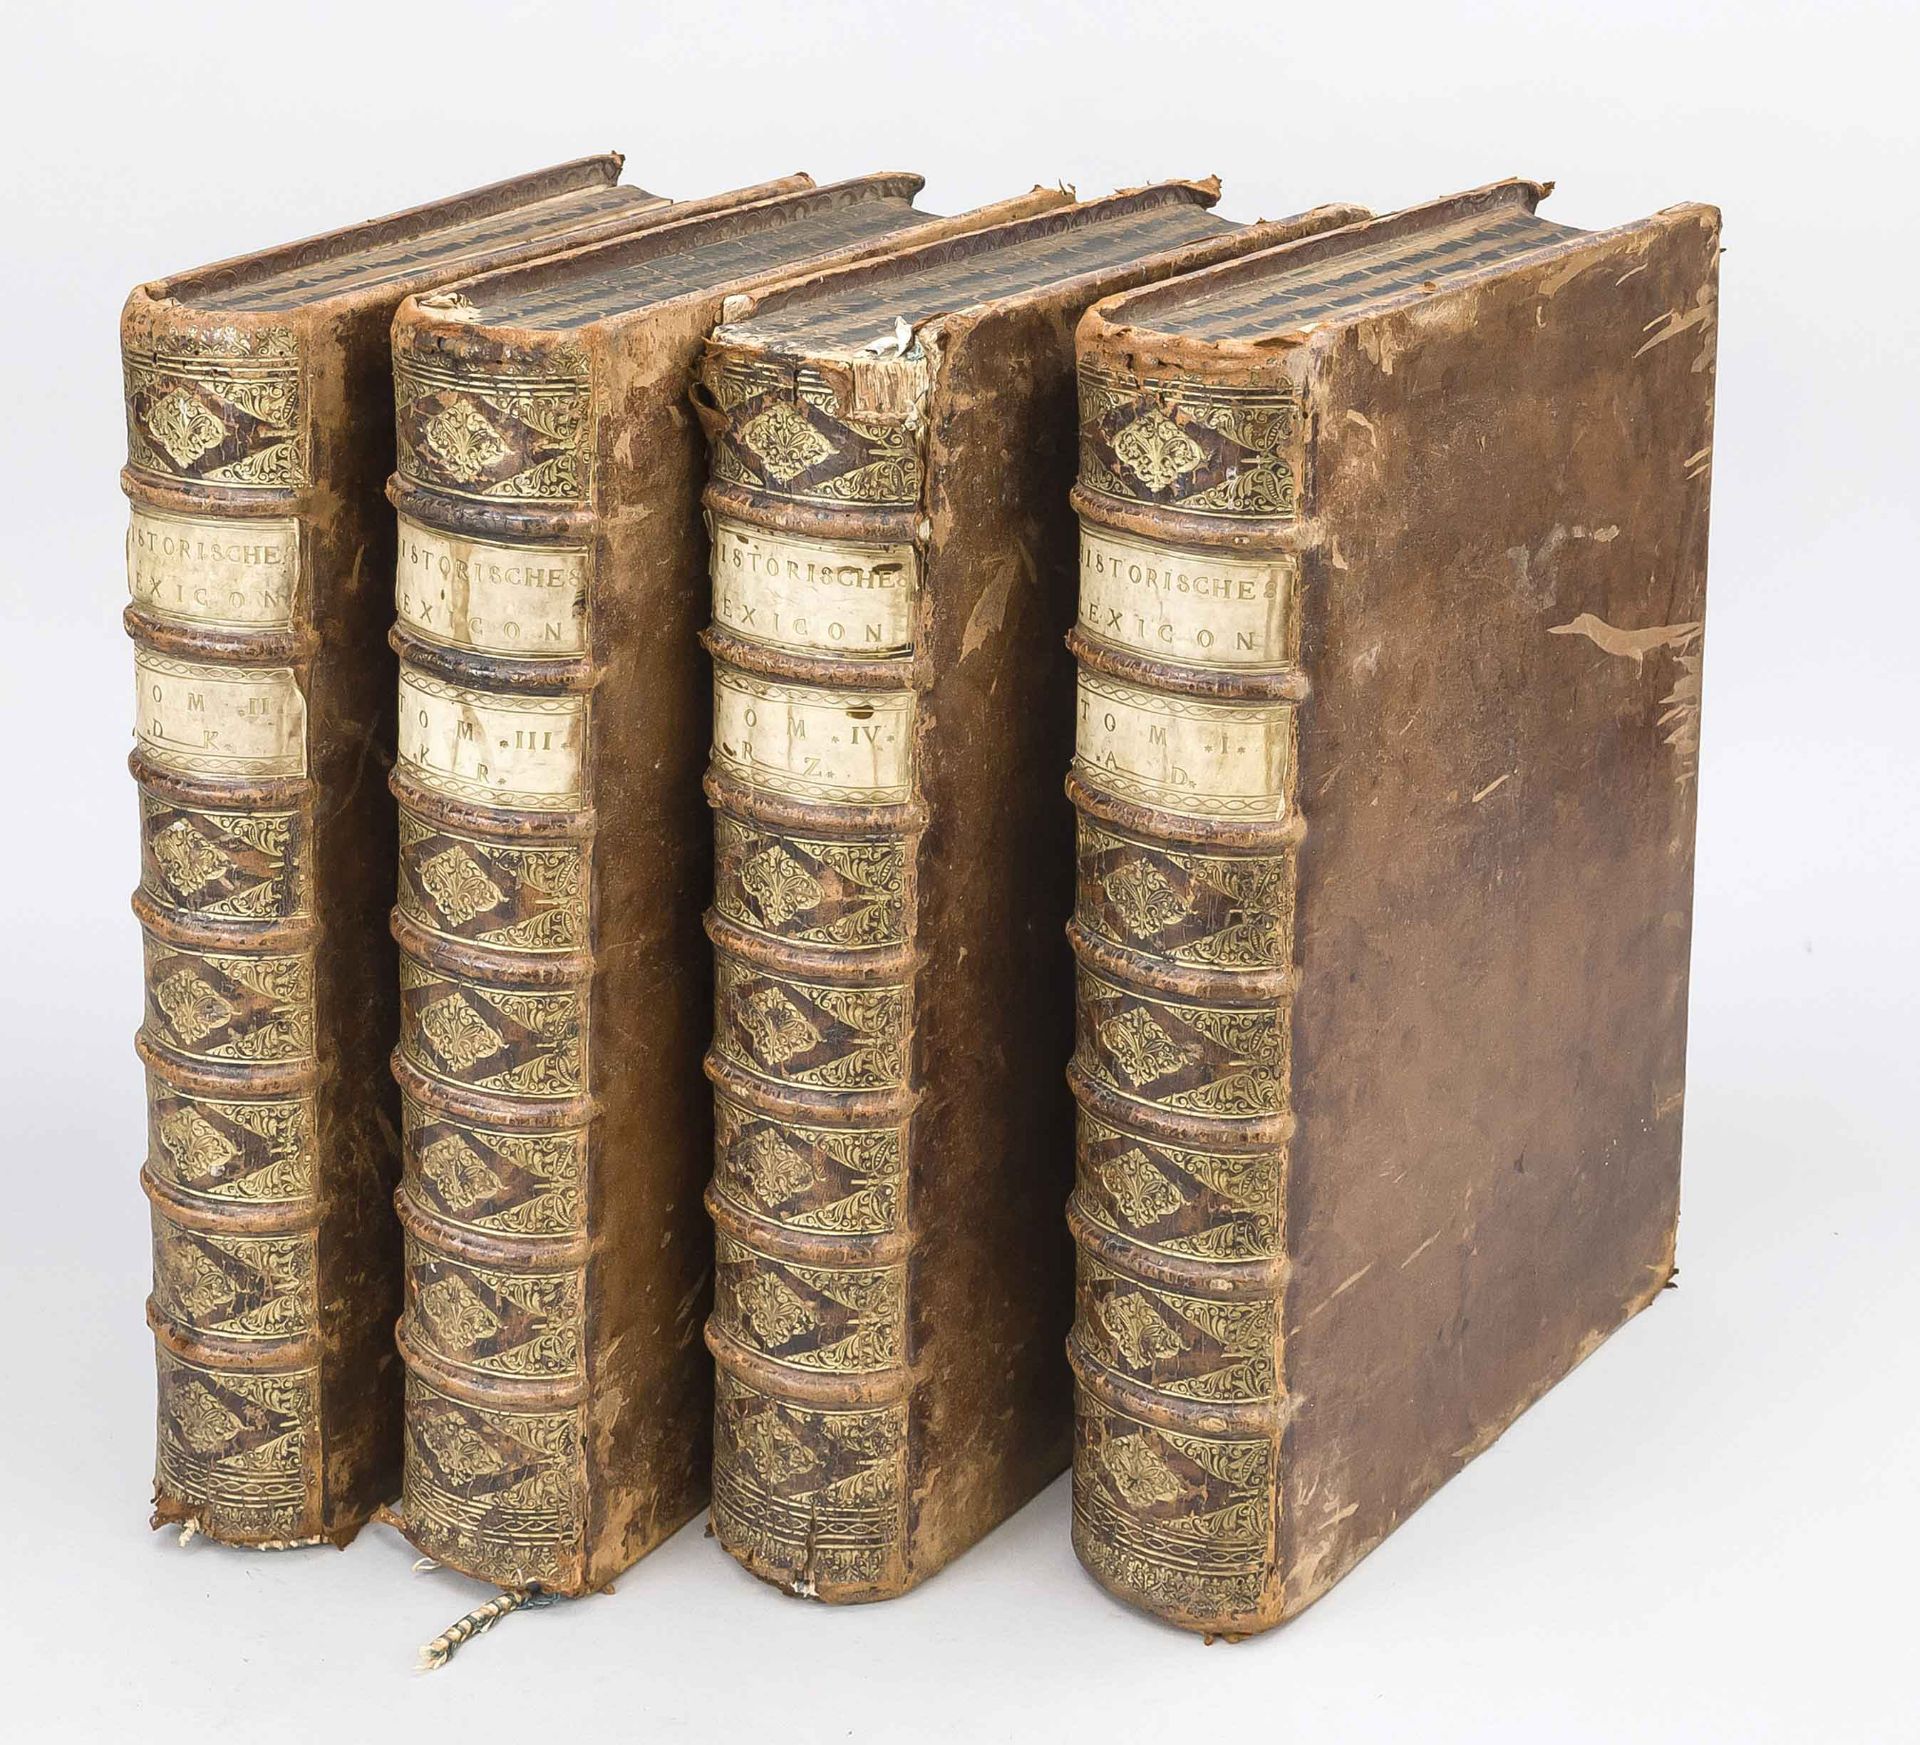 Lexicon 4 volumes by J.F. Buddeus (Budden) from 1722, title ''Allgemeines Historisches Lexicon, in